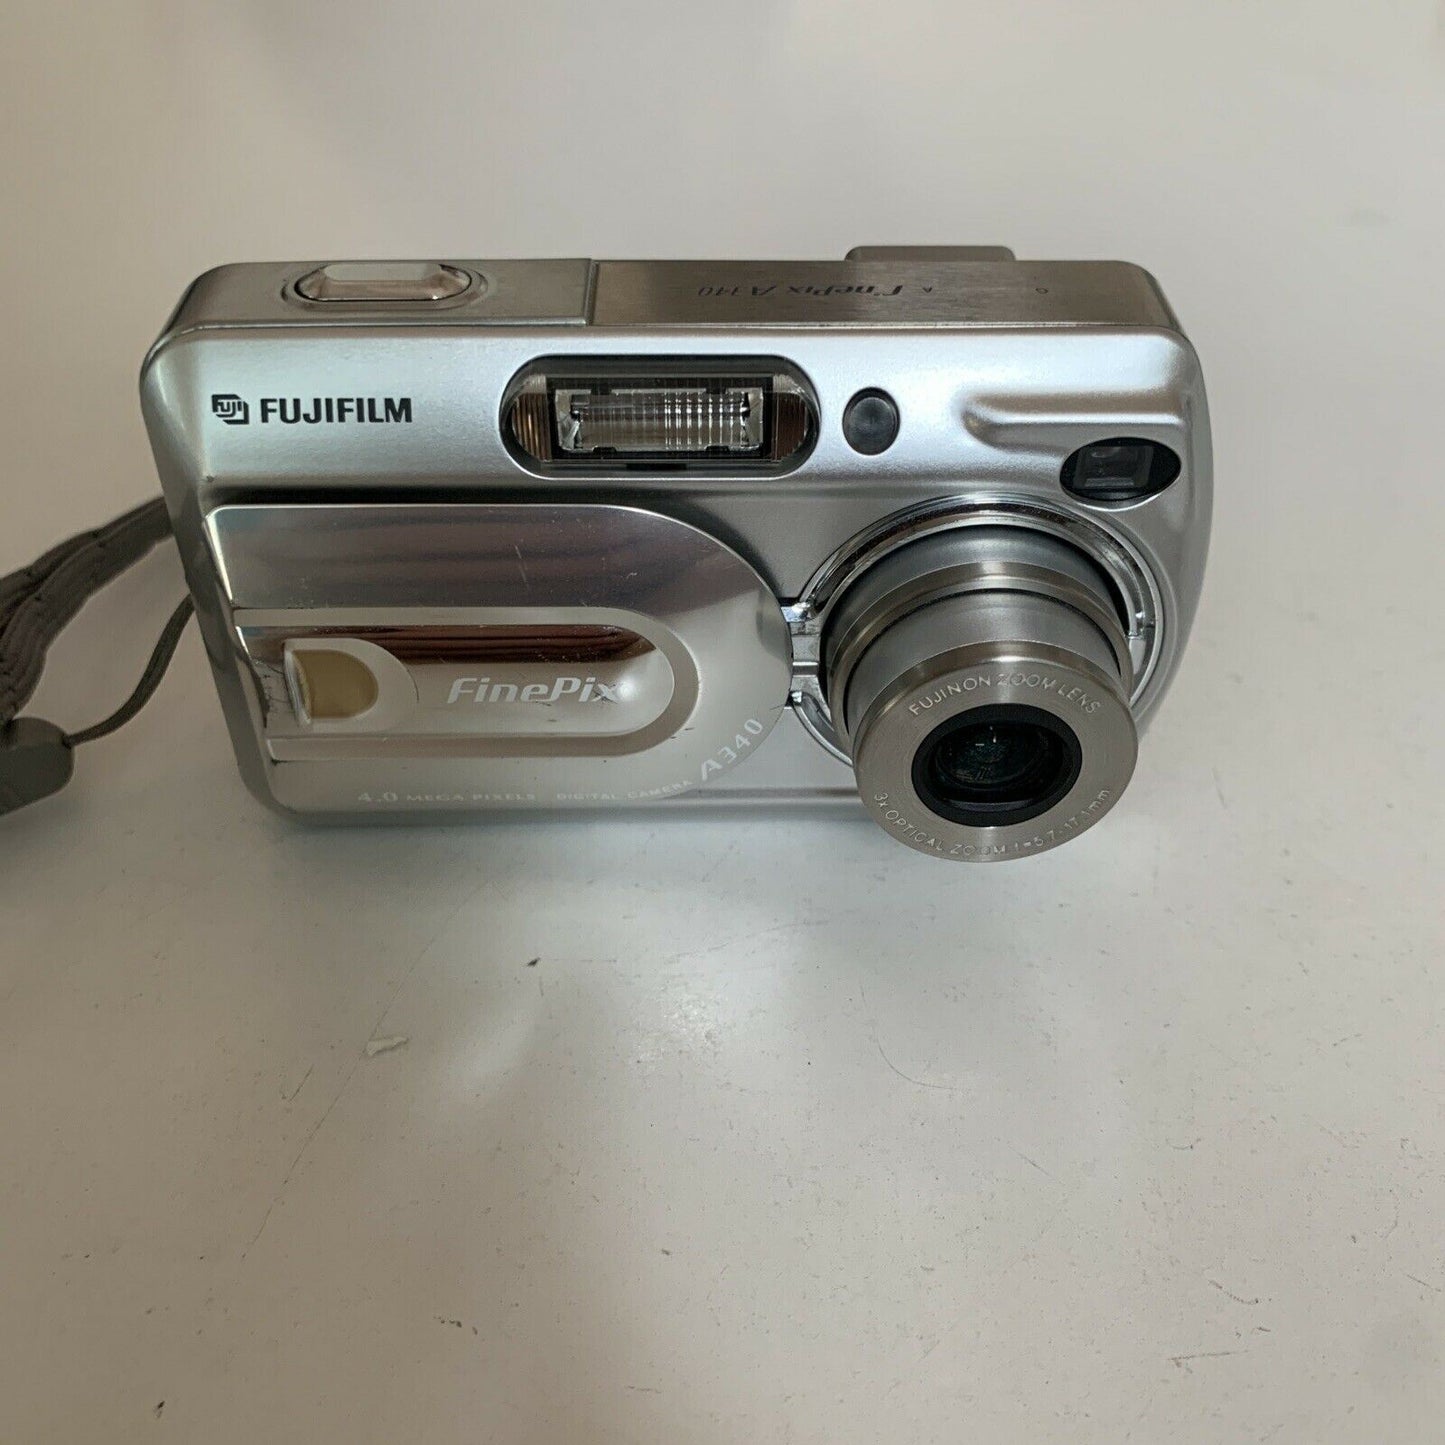 Fujifilm Finepix A340 Digital Camera 4MP 3x Zoom Silver